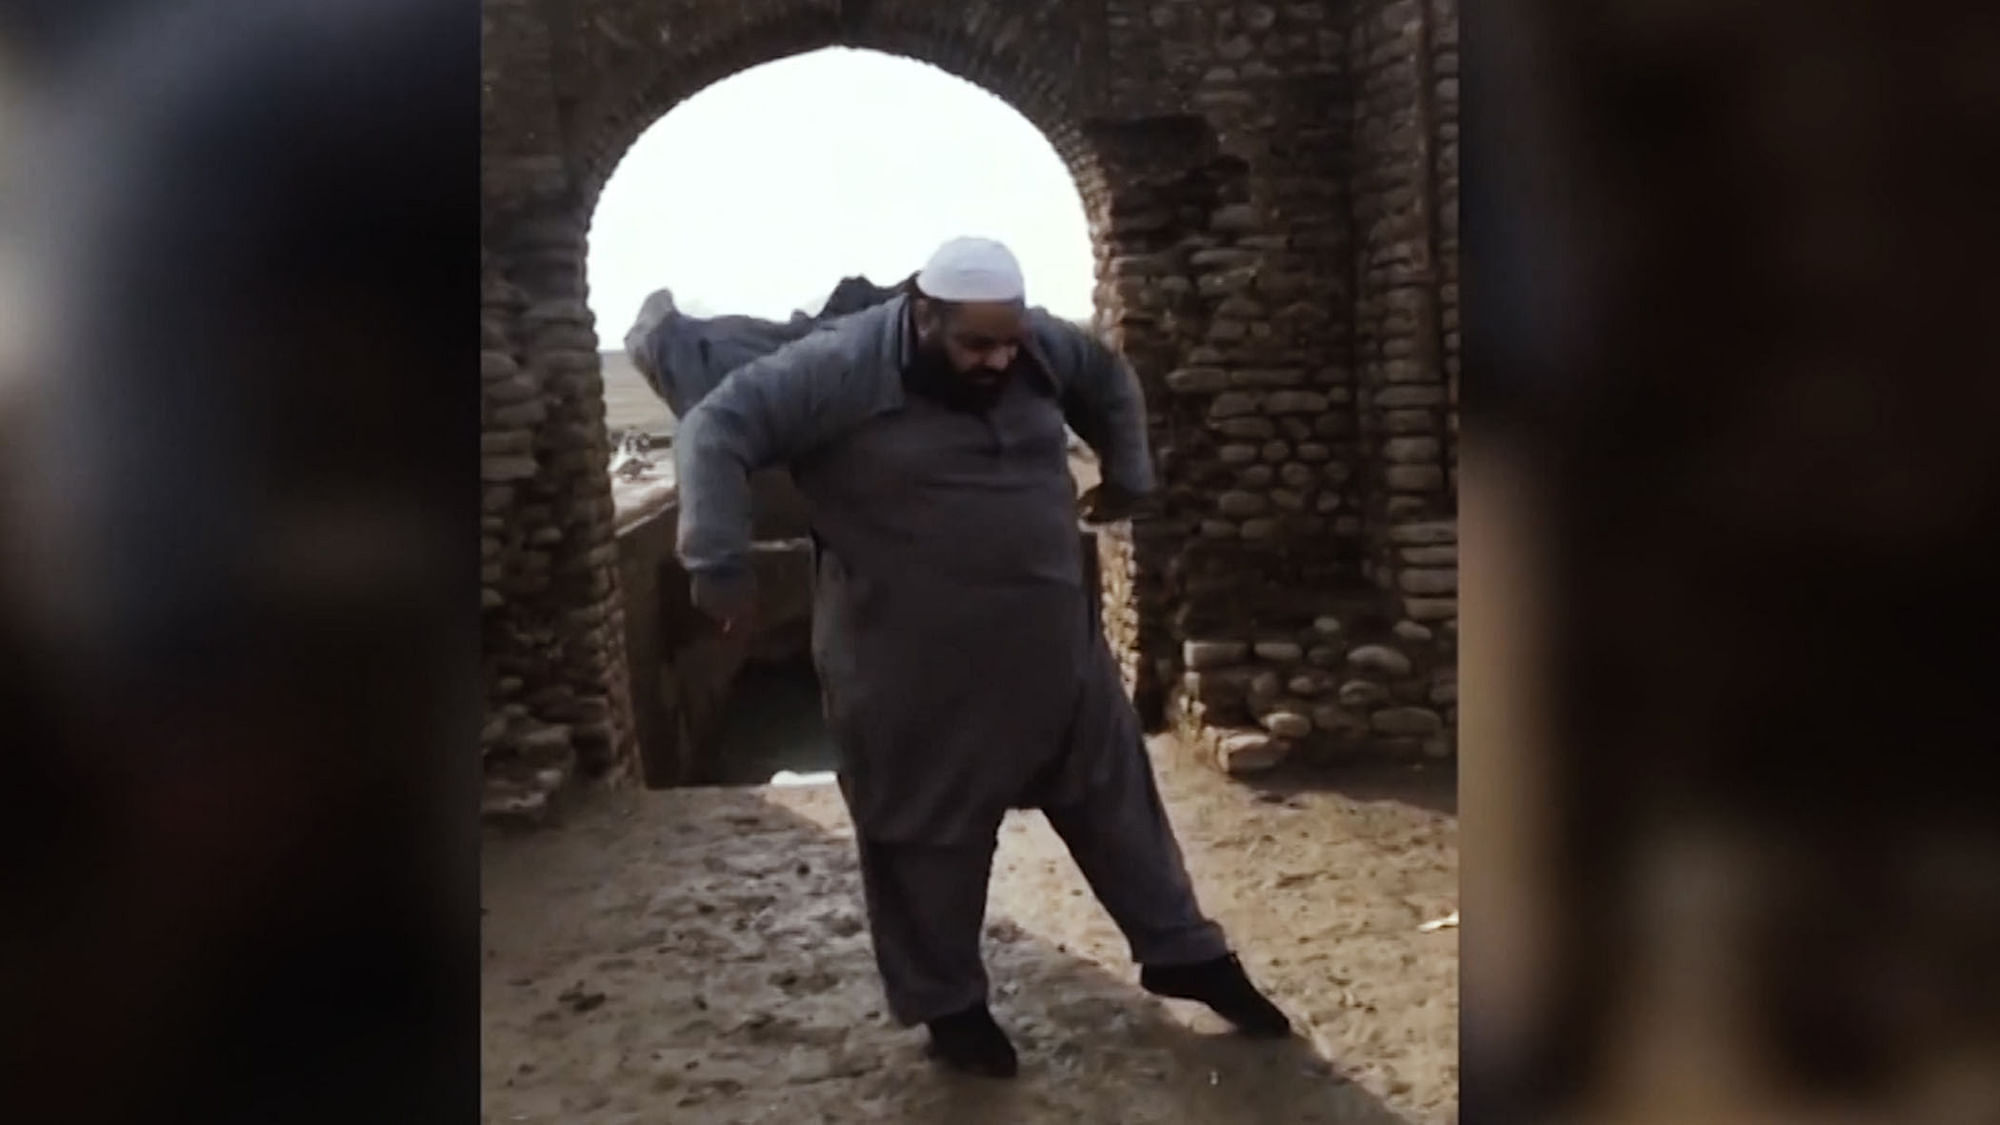 This man from Pakistan displays his fabulous moves. (Photo: AP/Jukin Media)